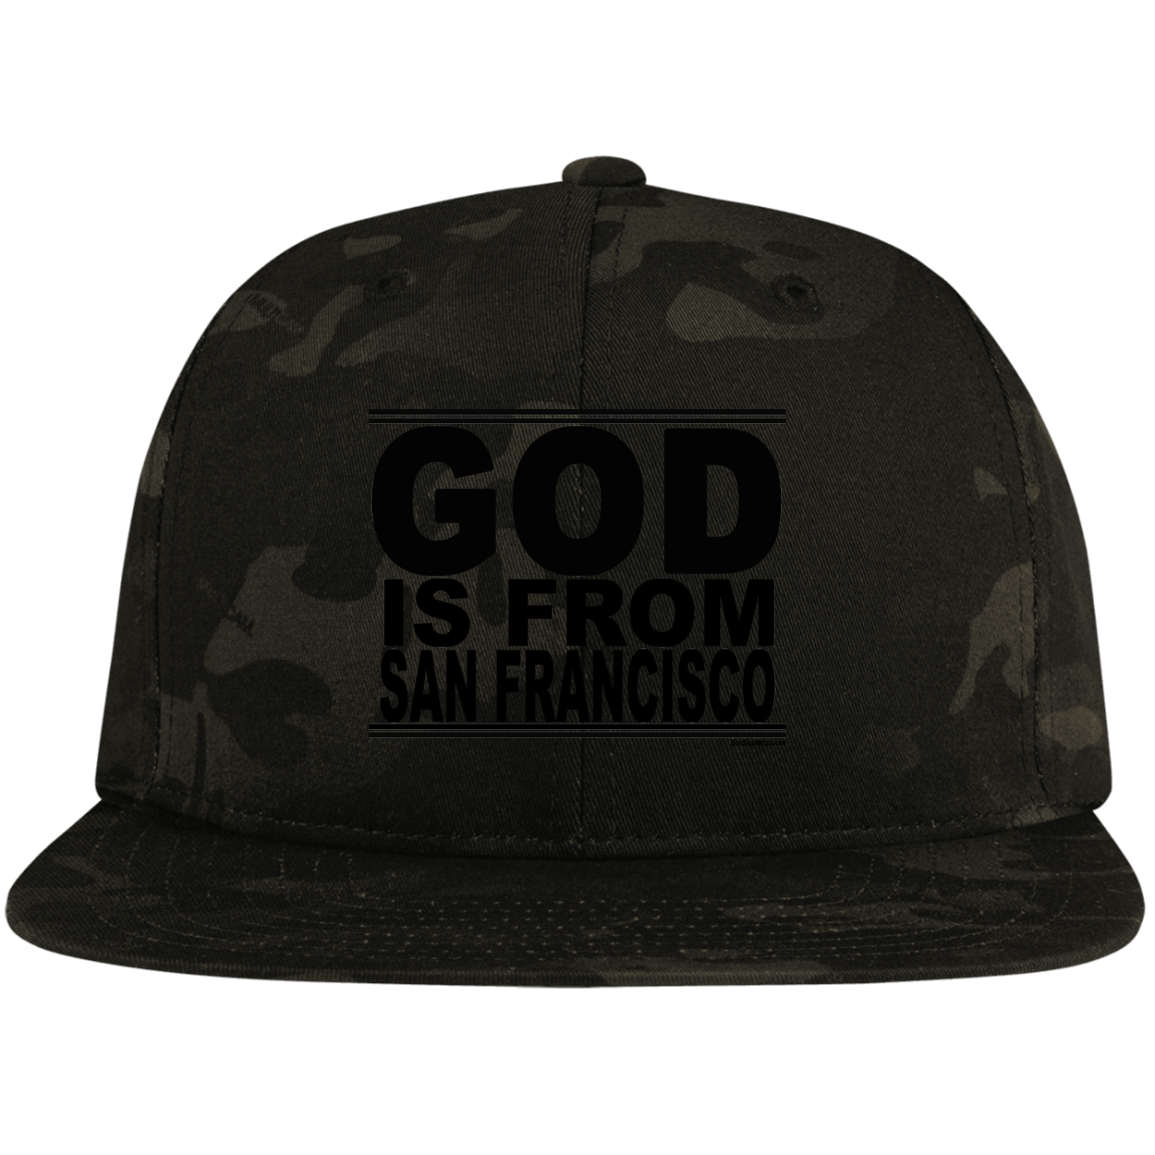 #GodIsFromSanFrancisco - Snapback Hat